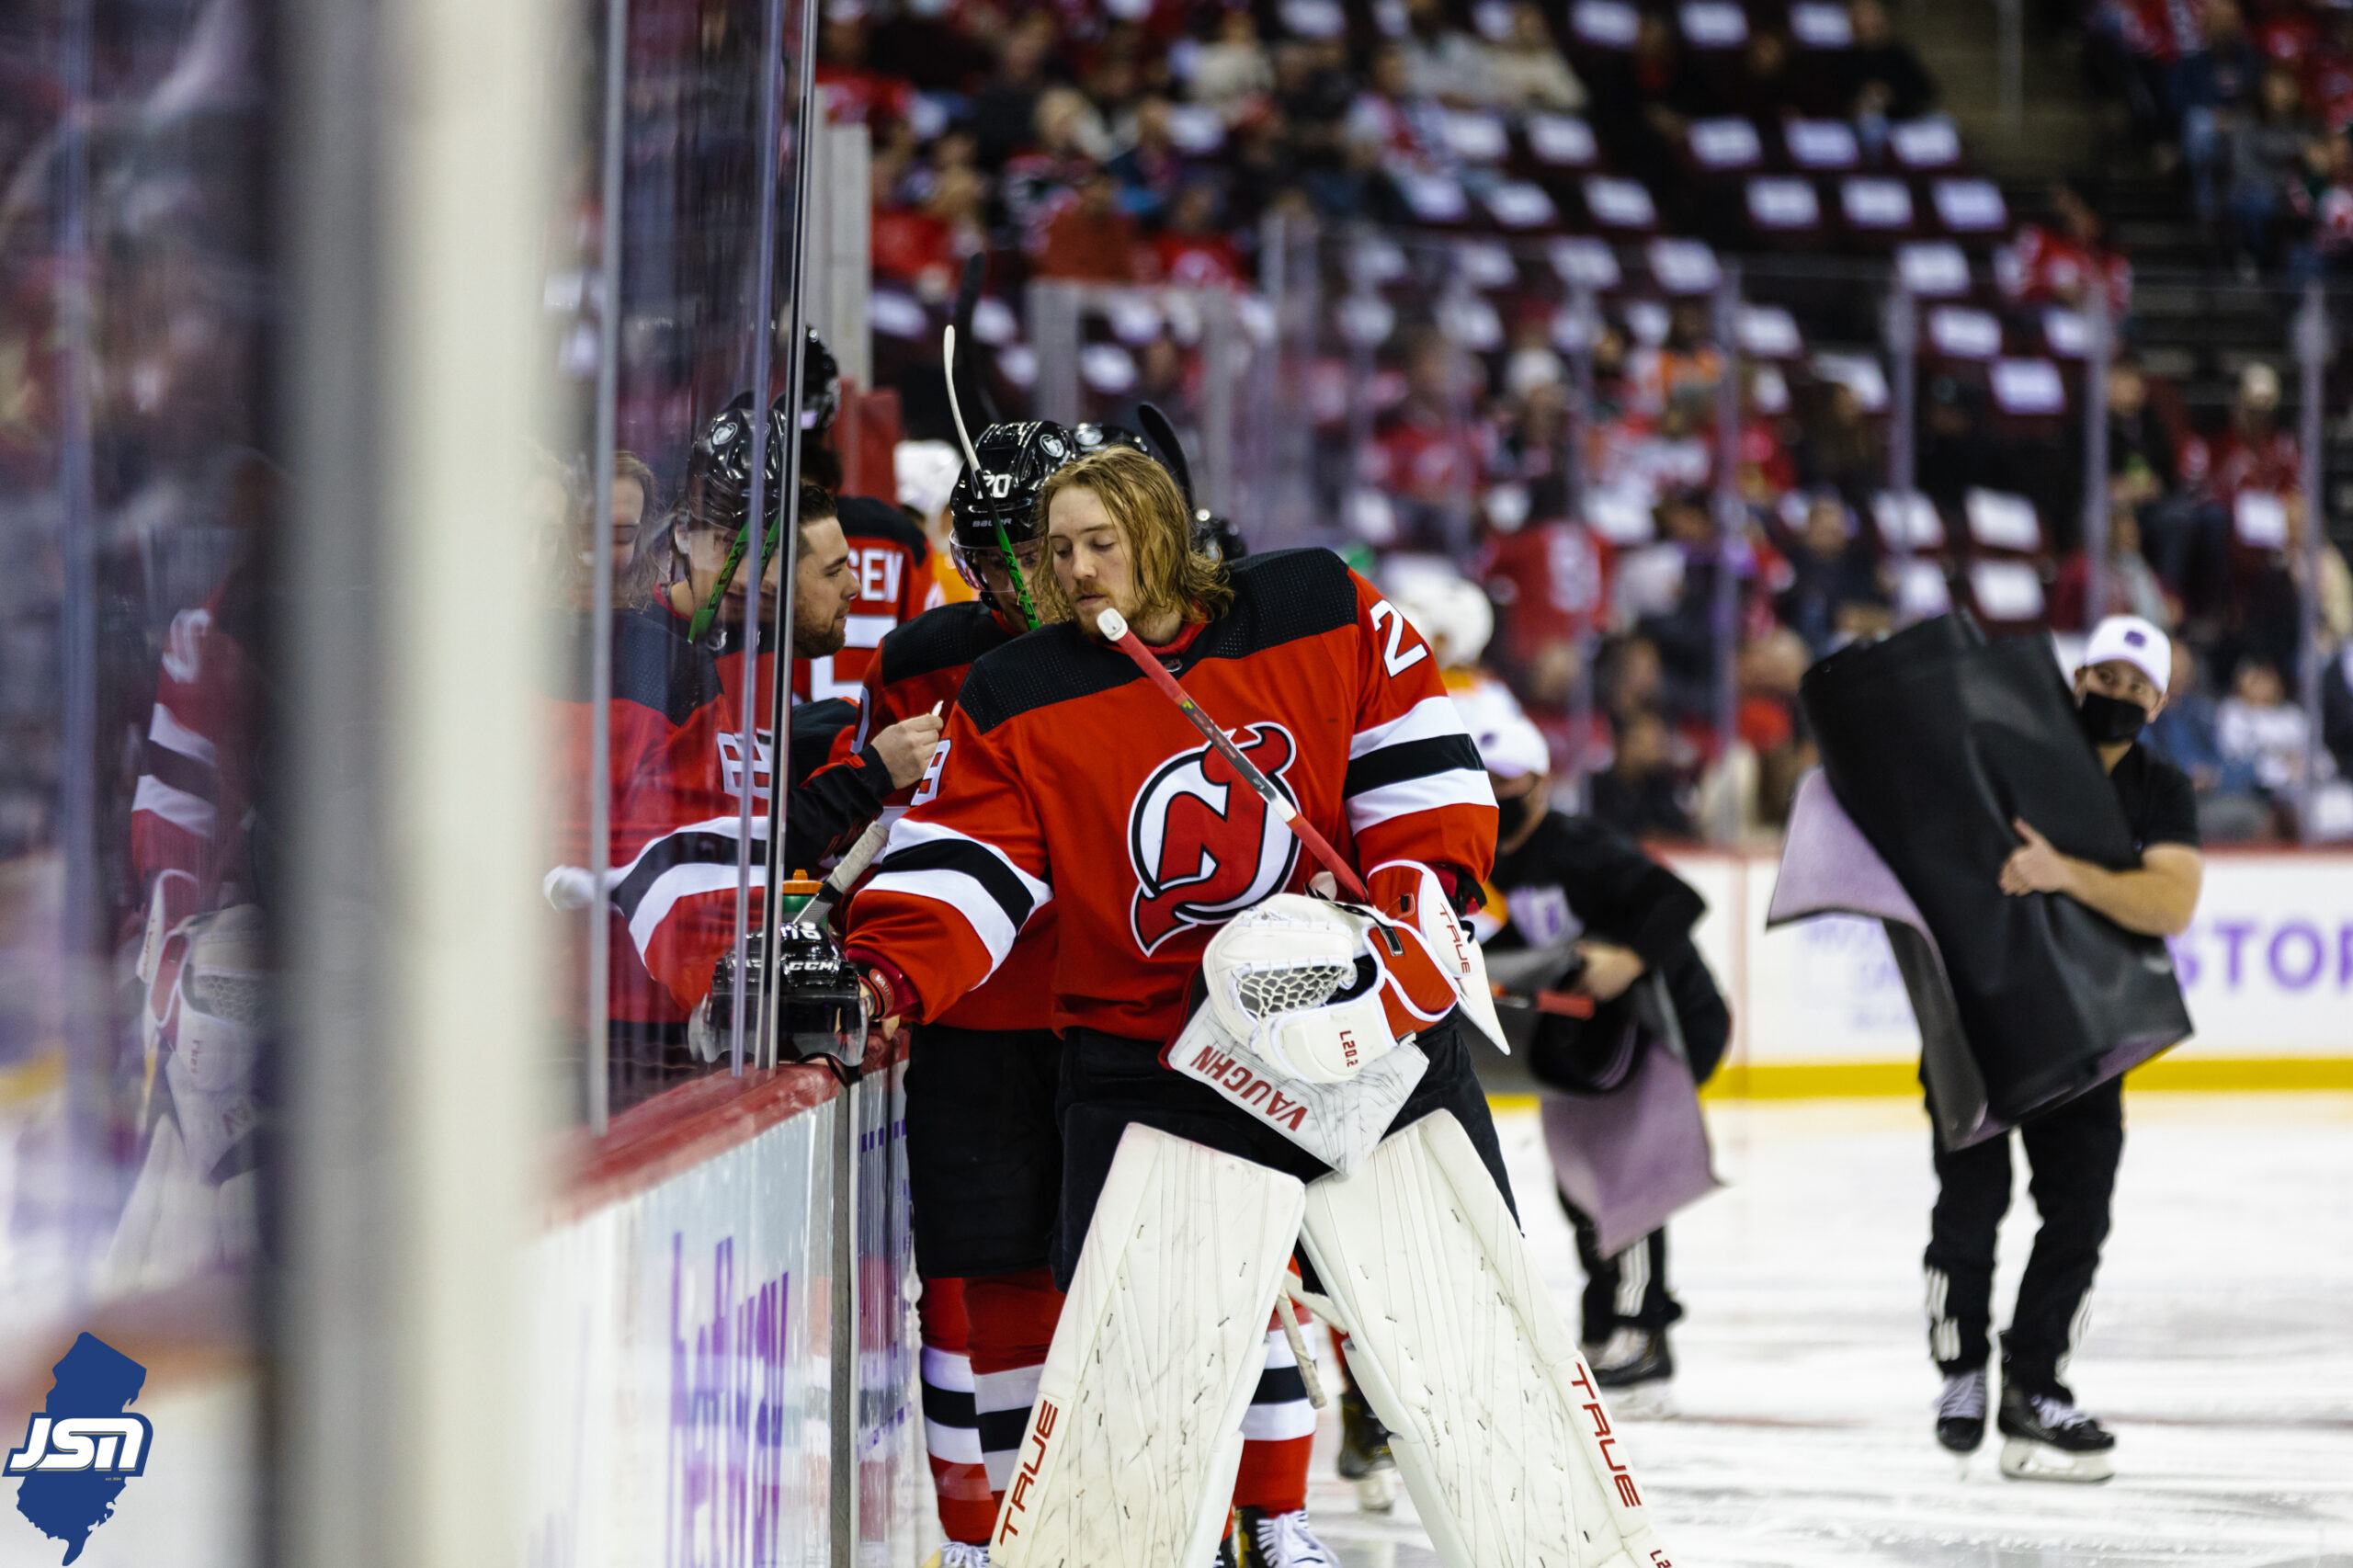 NJ Devils vs. Ottawa Senators game photos at Prudential Center